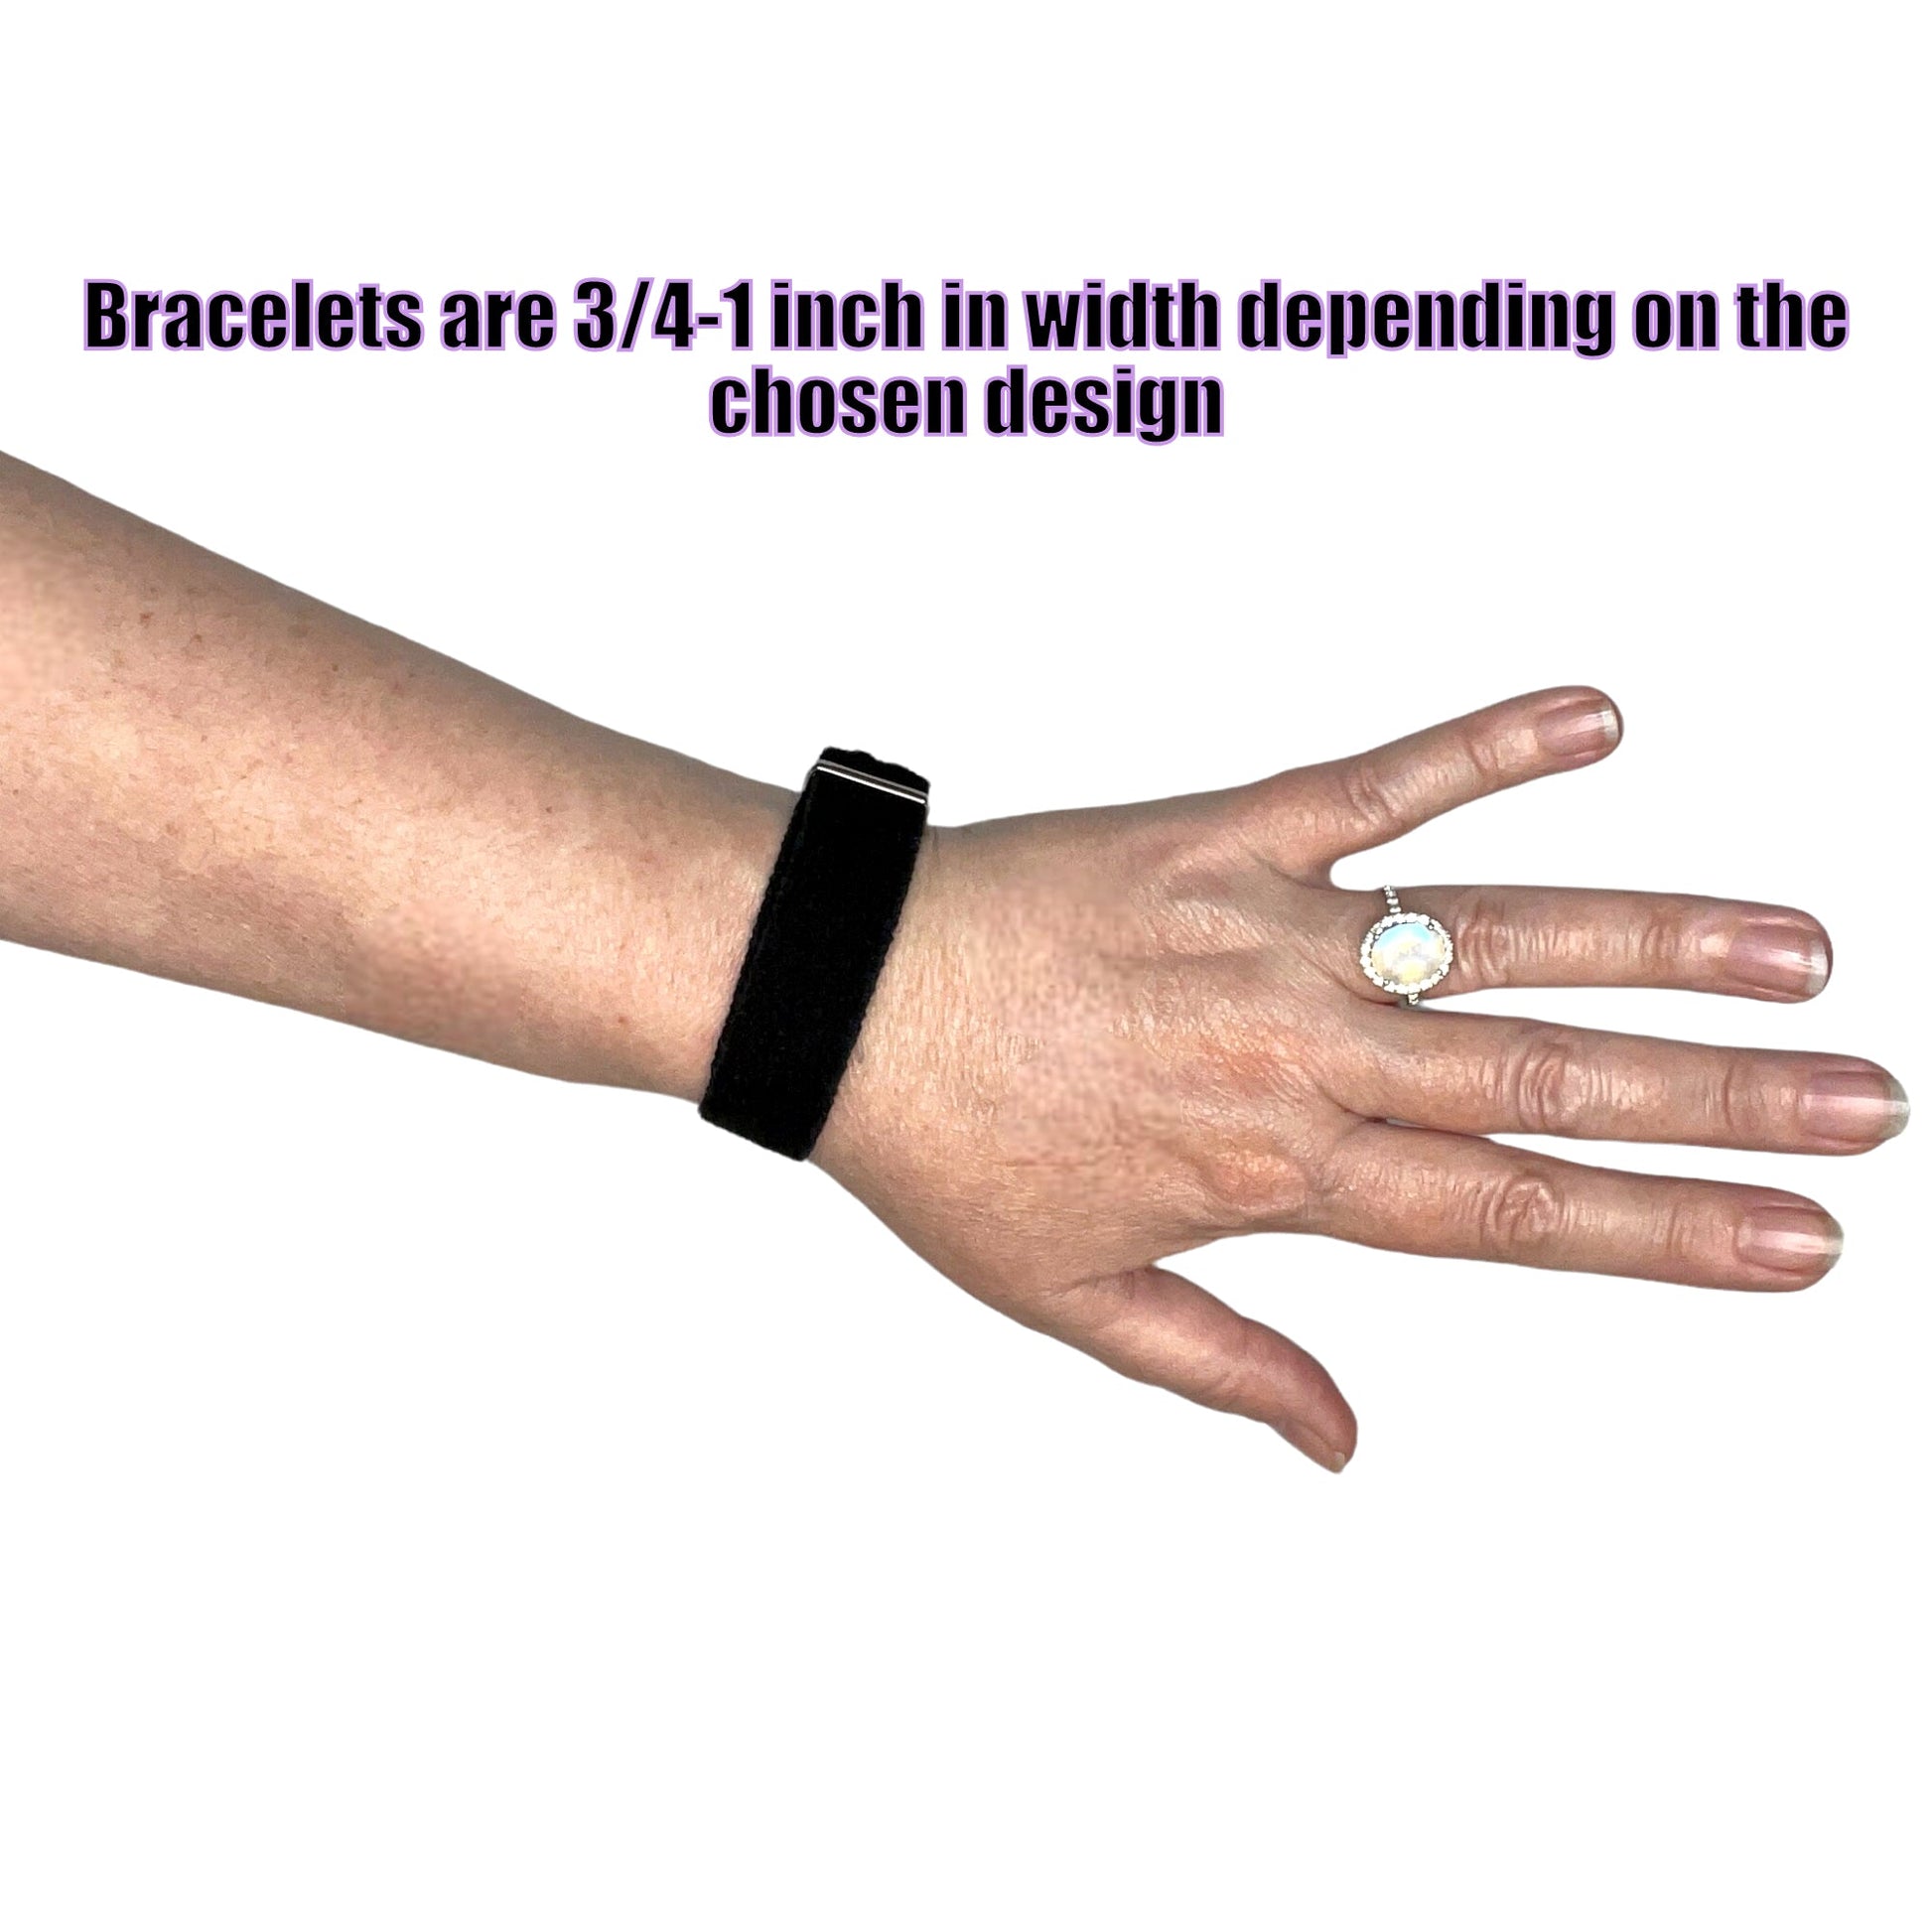 Designer Anti-Nausea Bracelets-Adjustable Motion Sickness Relief, Calming-Pair - Acupressure Bracelets